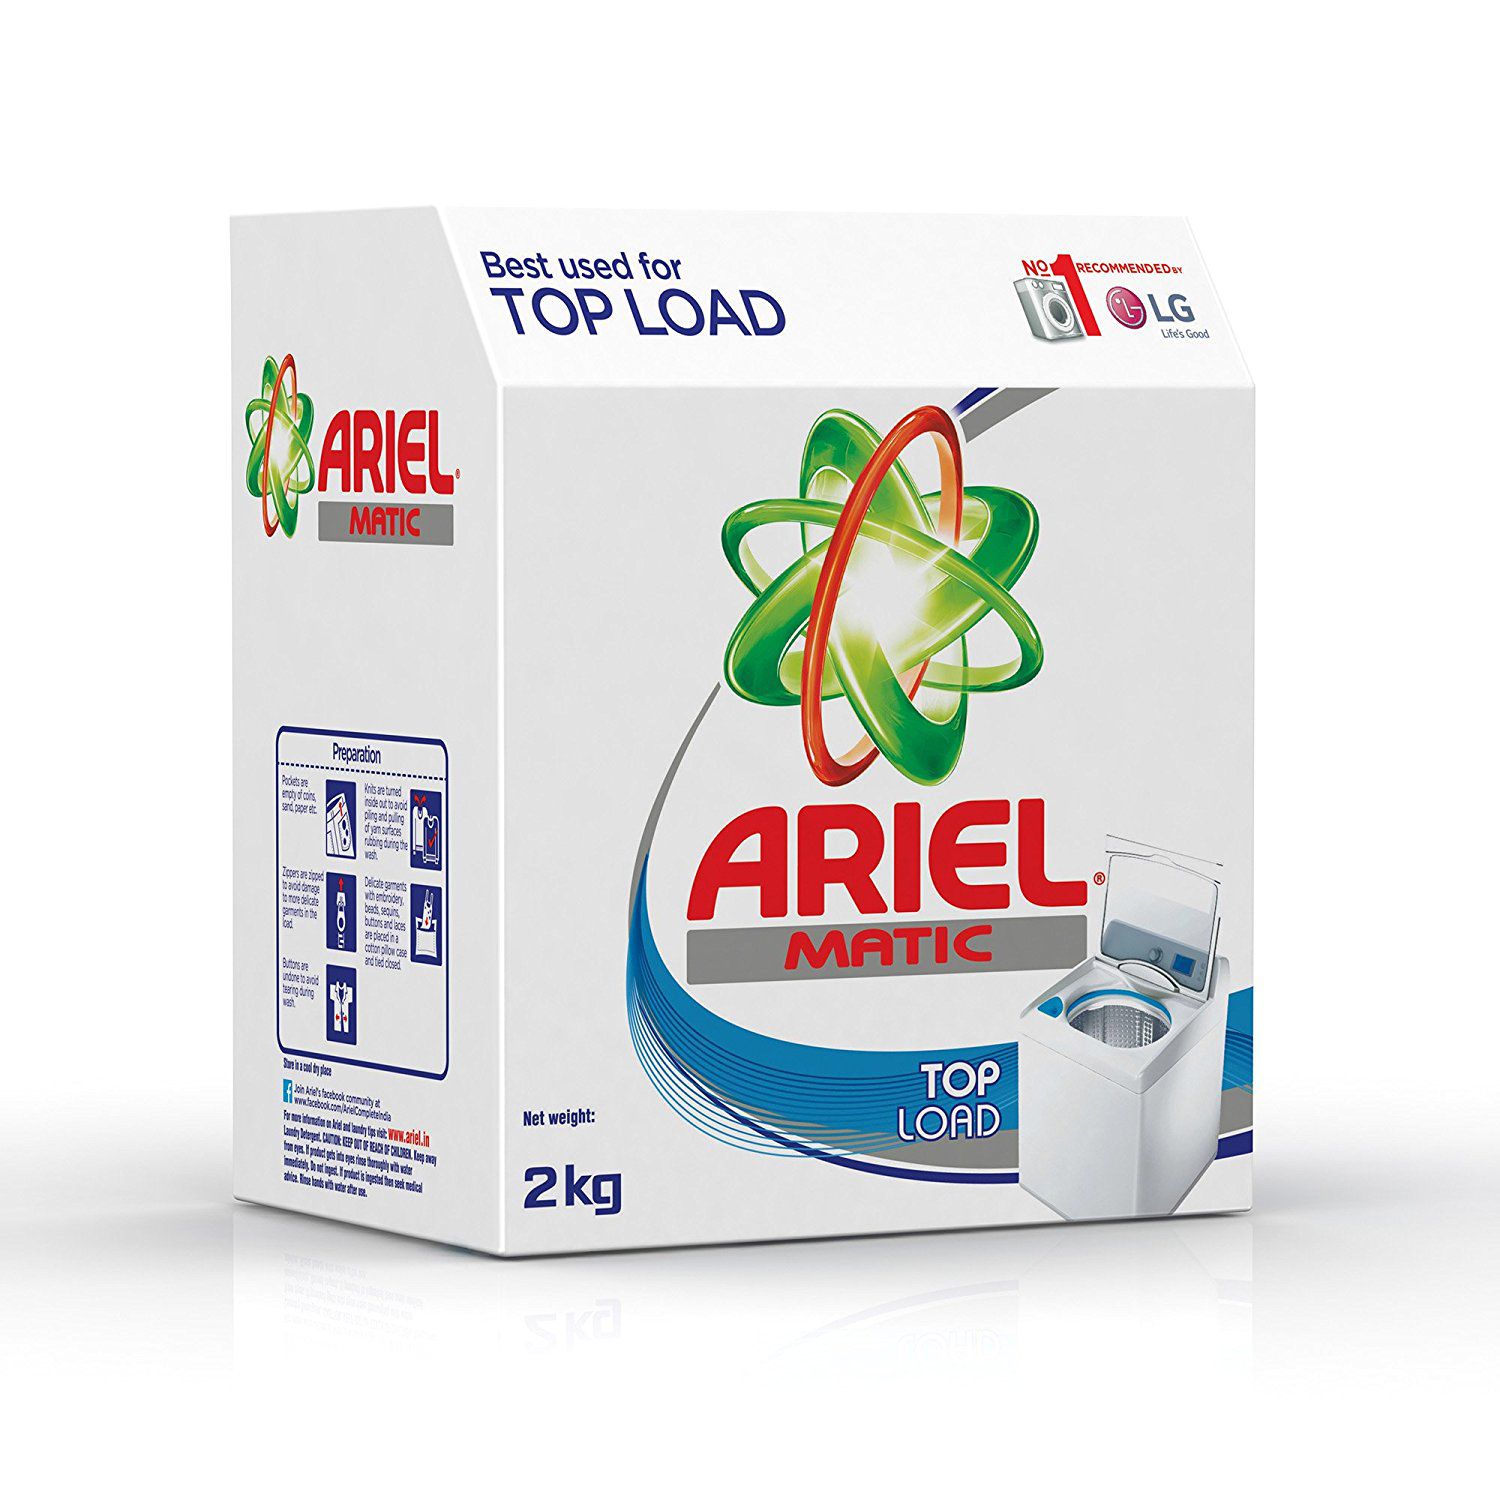 Ariel Matic Top Load Washing Detergent Powder 2 Kg Pack Of 3 Buy Ariel